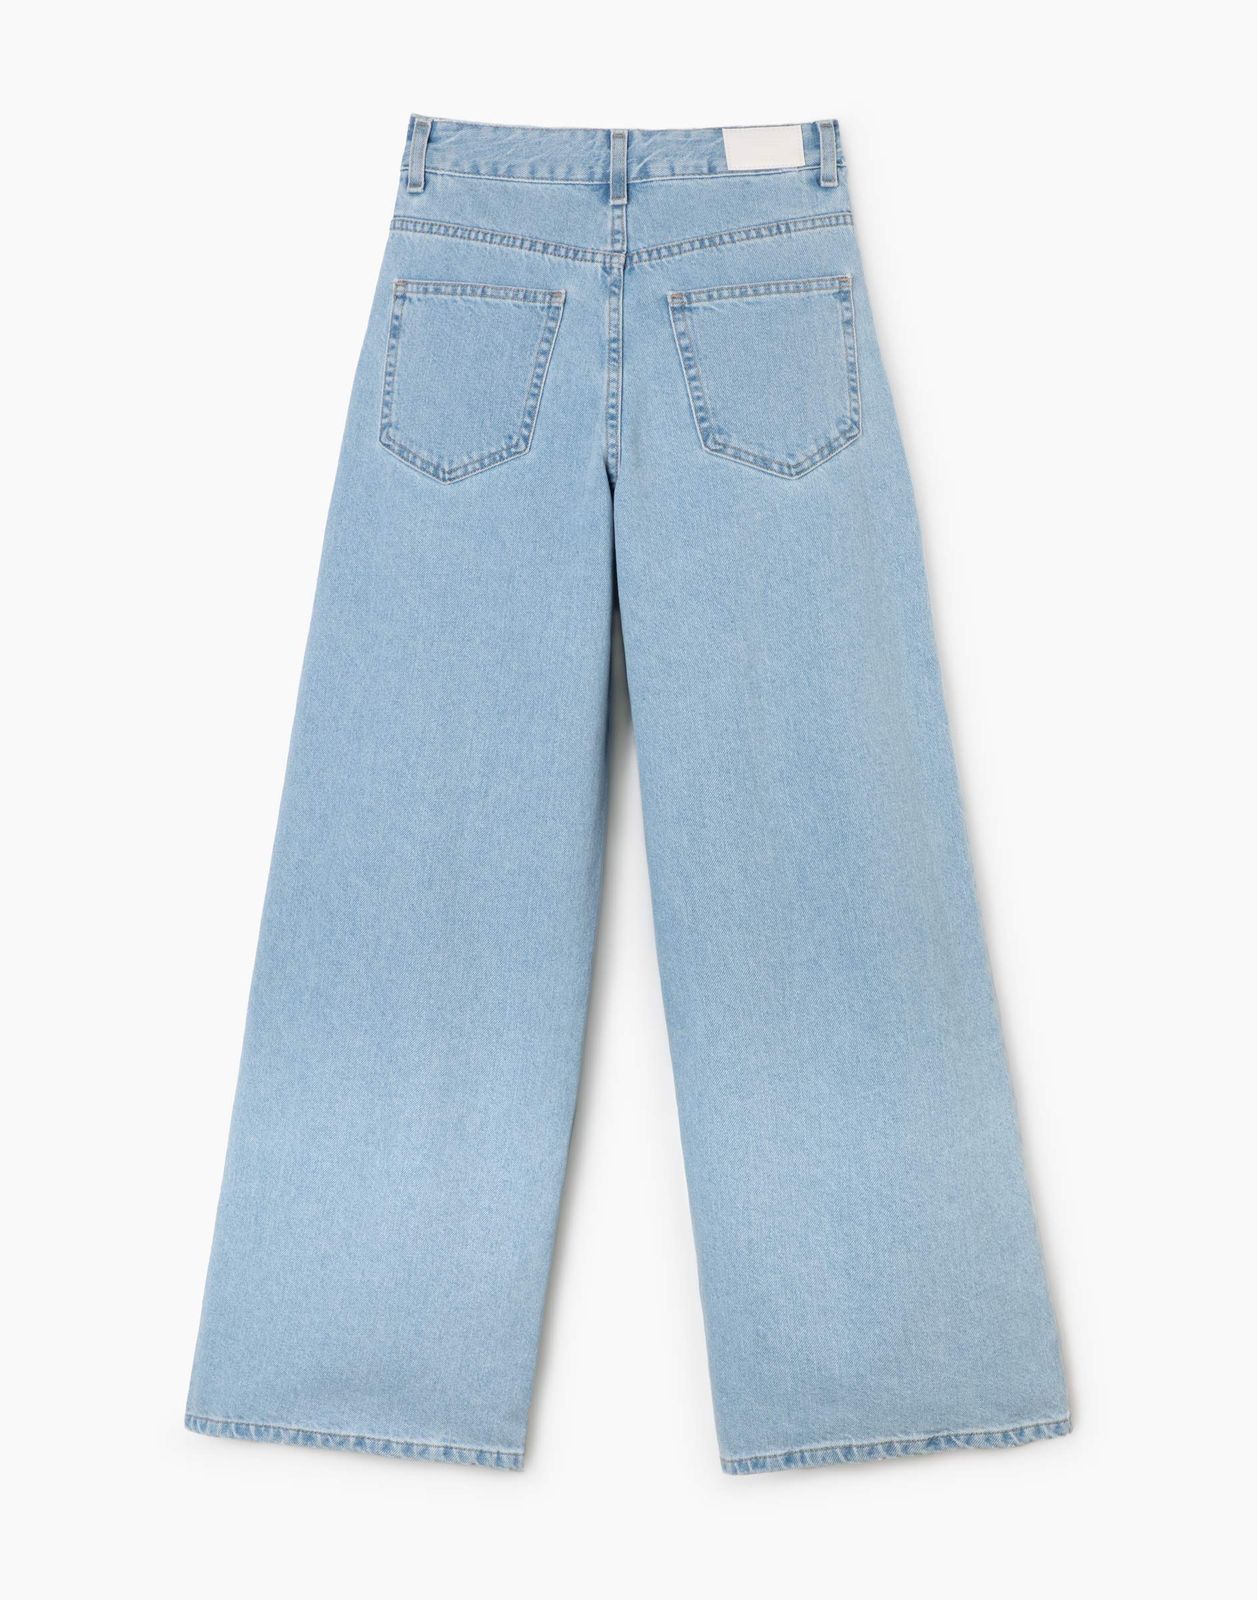 Джинсы Gloria Jeans GJN031761 синий/лайт/ 14+/164 (42) джинсы для девочек gloria jeans gjn029021 медиум лайт 7 8л 128